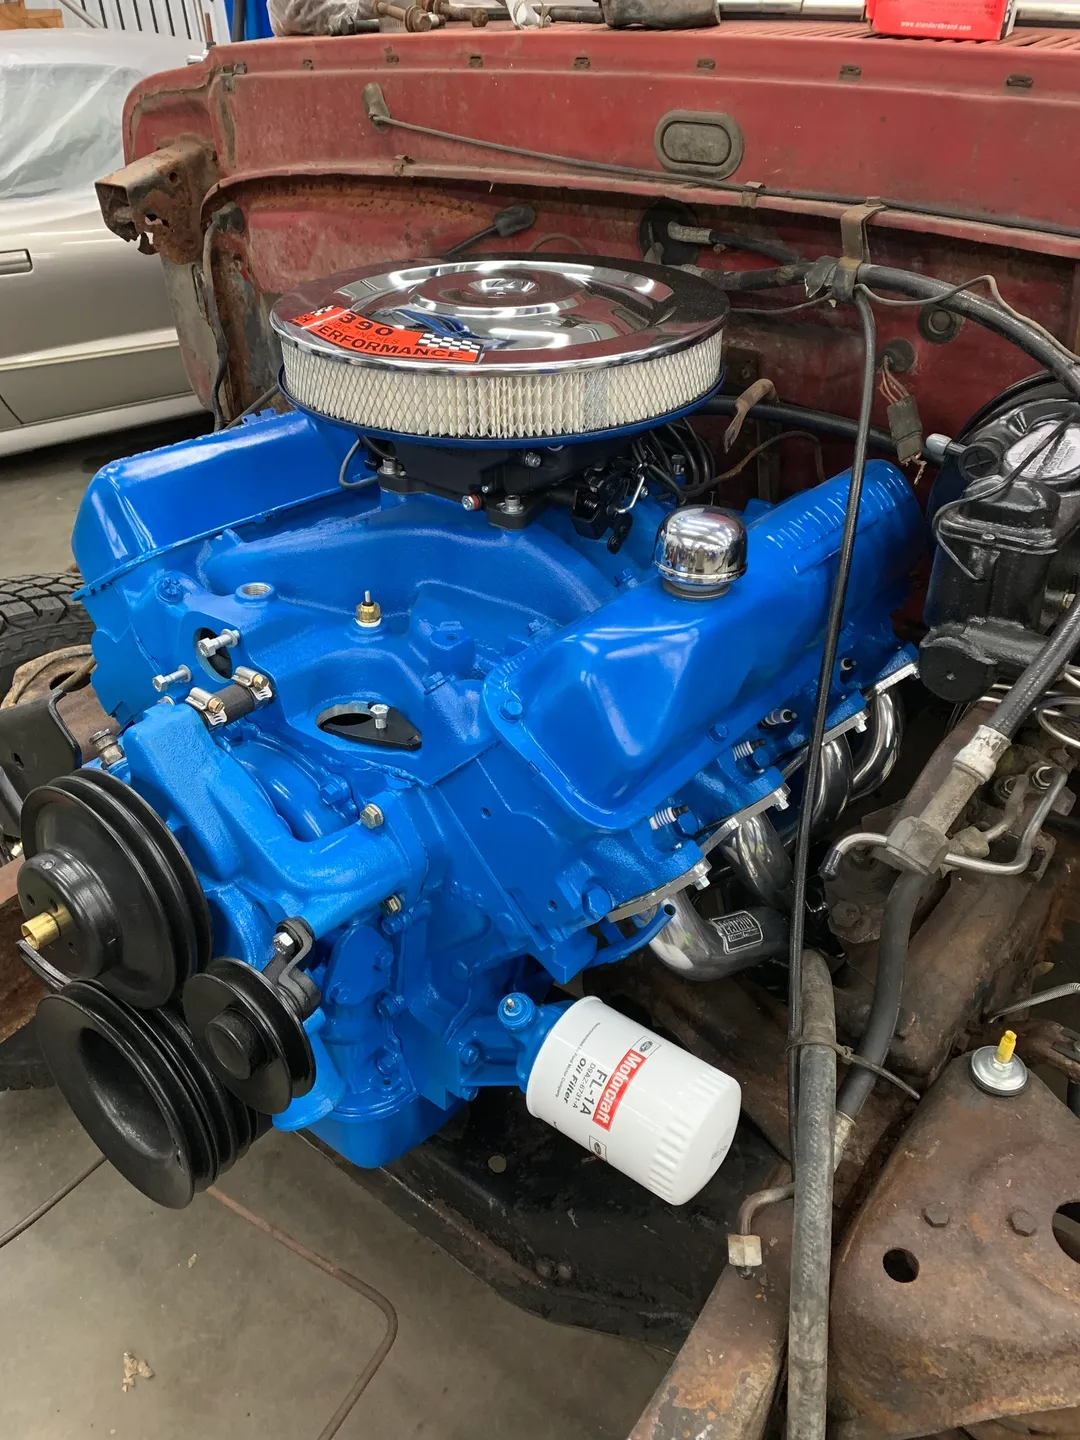 A blue, machine, side view, custom auto part